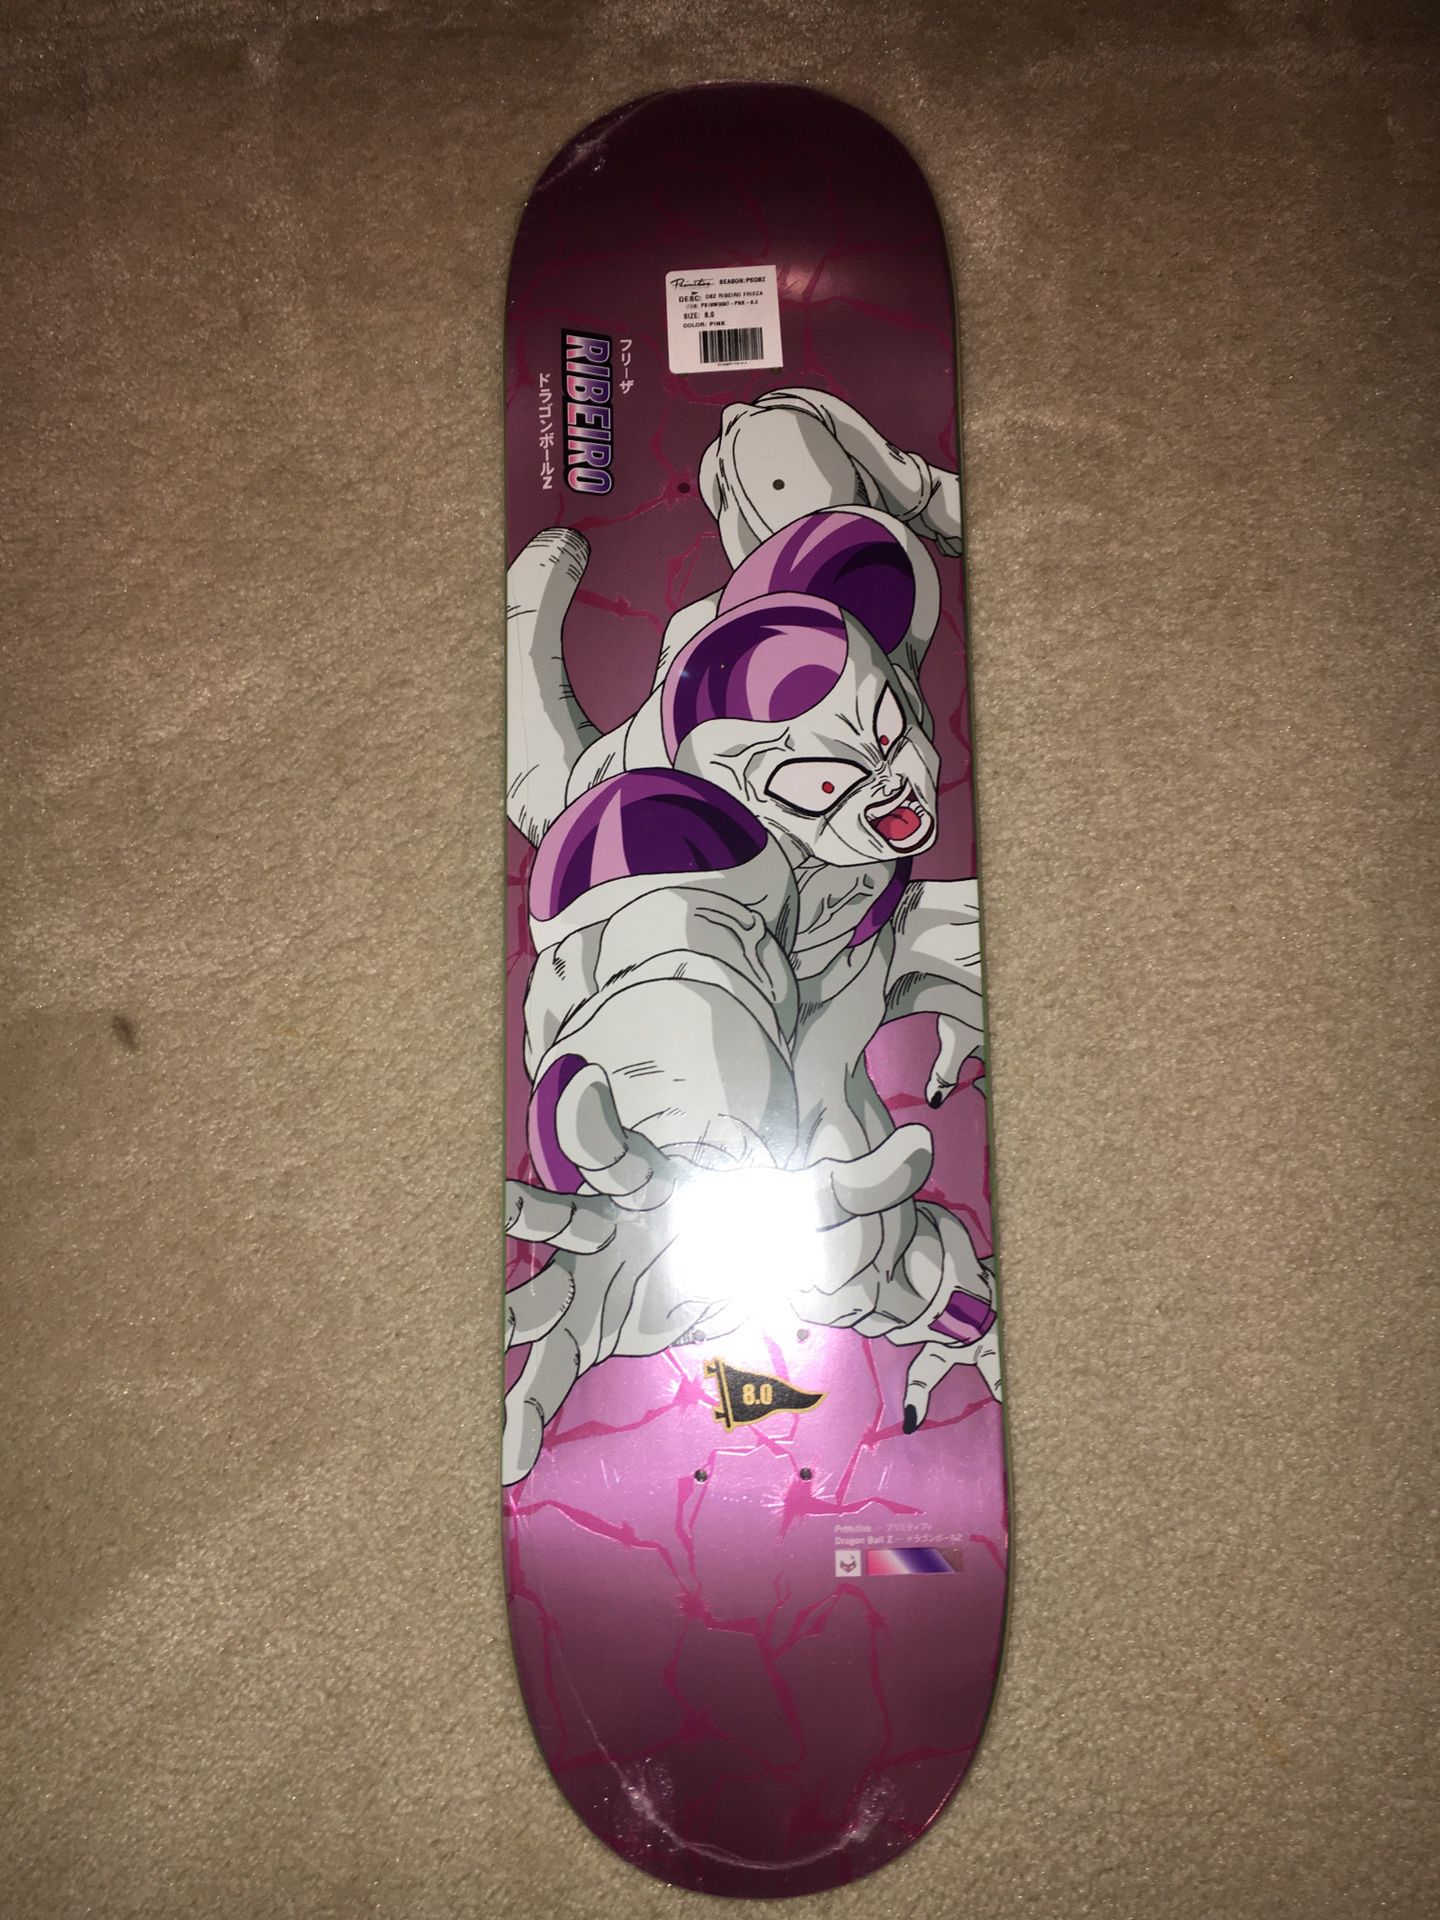 Primitive Dragon Ball Z Frieza Skateboard Deck W/Free Primitive Grip Tape and sticker included Size 8